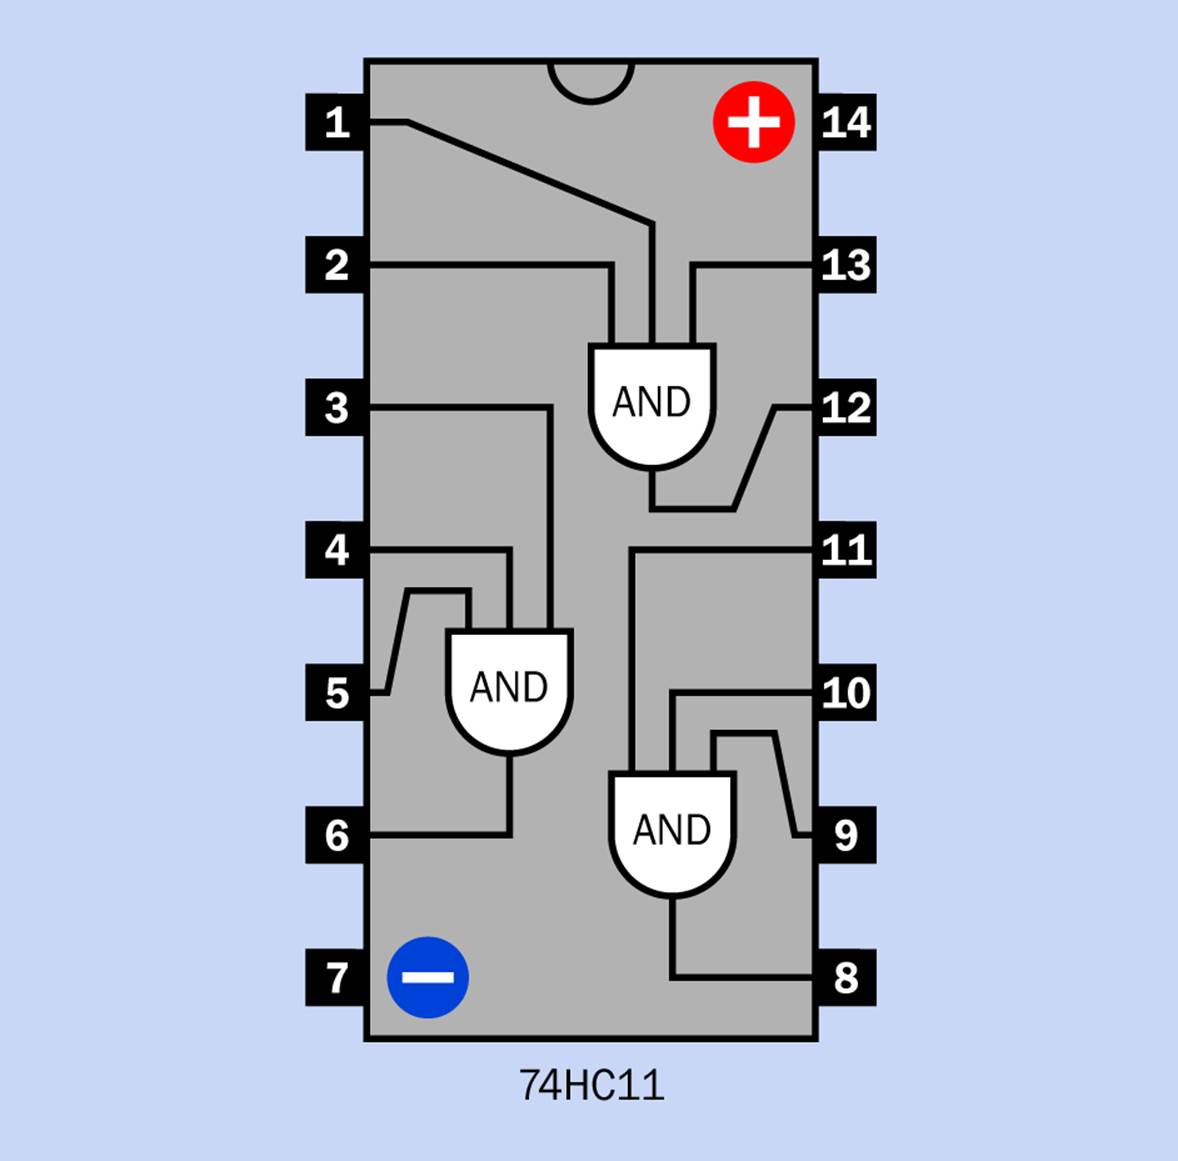 A 14-pin logic chip can contain three three-input gates, as shown here.